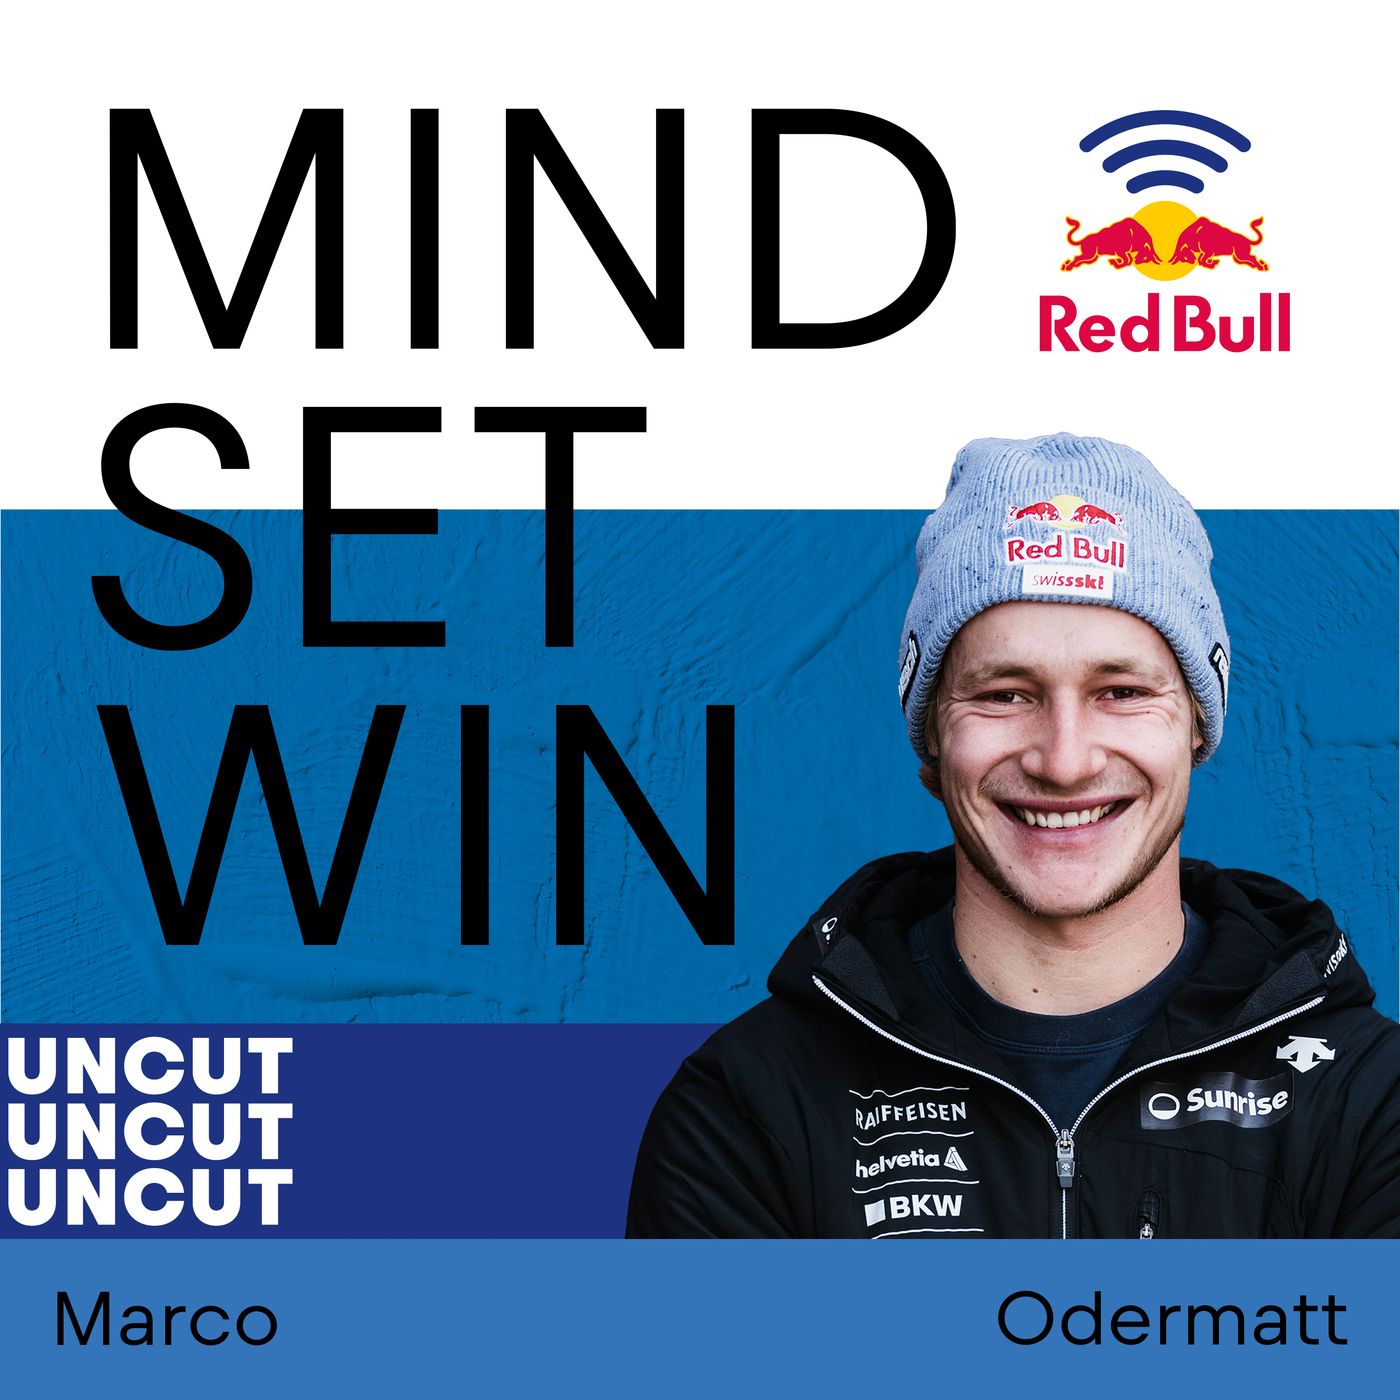 UNCUT: Full-length interview with leading alpine skier Marco Odermatt